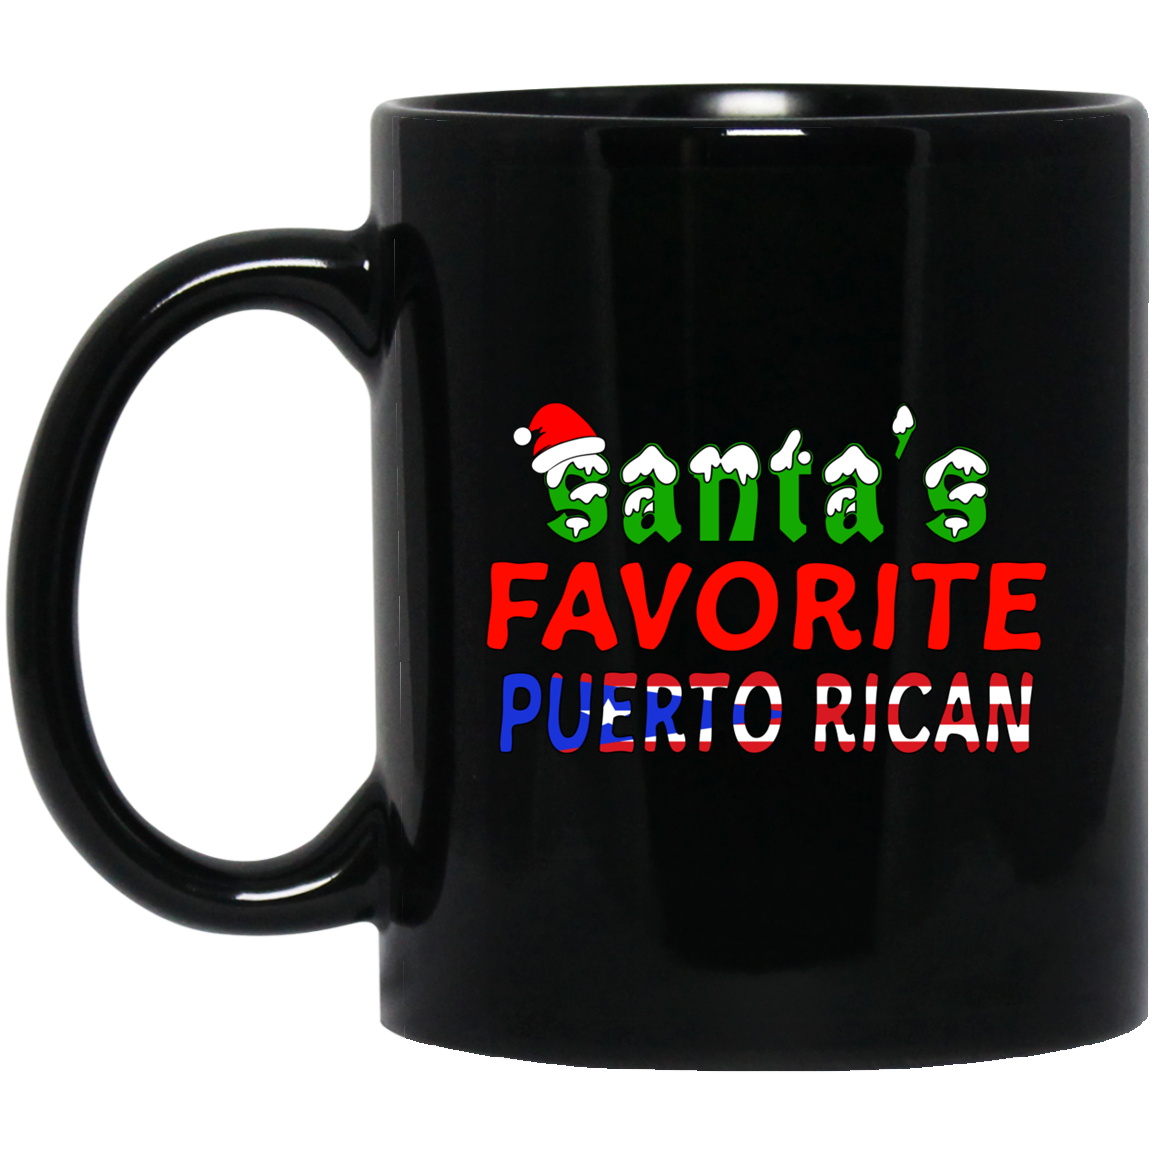 Santa's Favorite PR 11 oz. Black Mug - Puerto Rican Pride